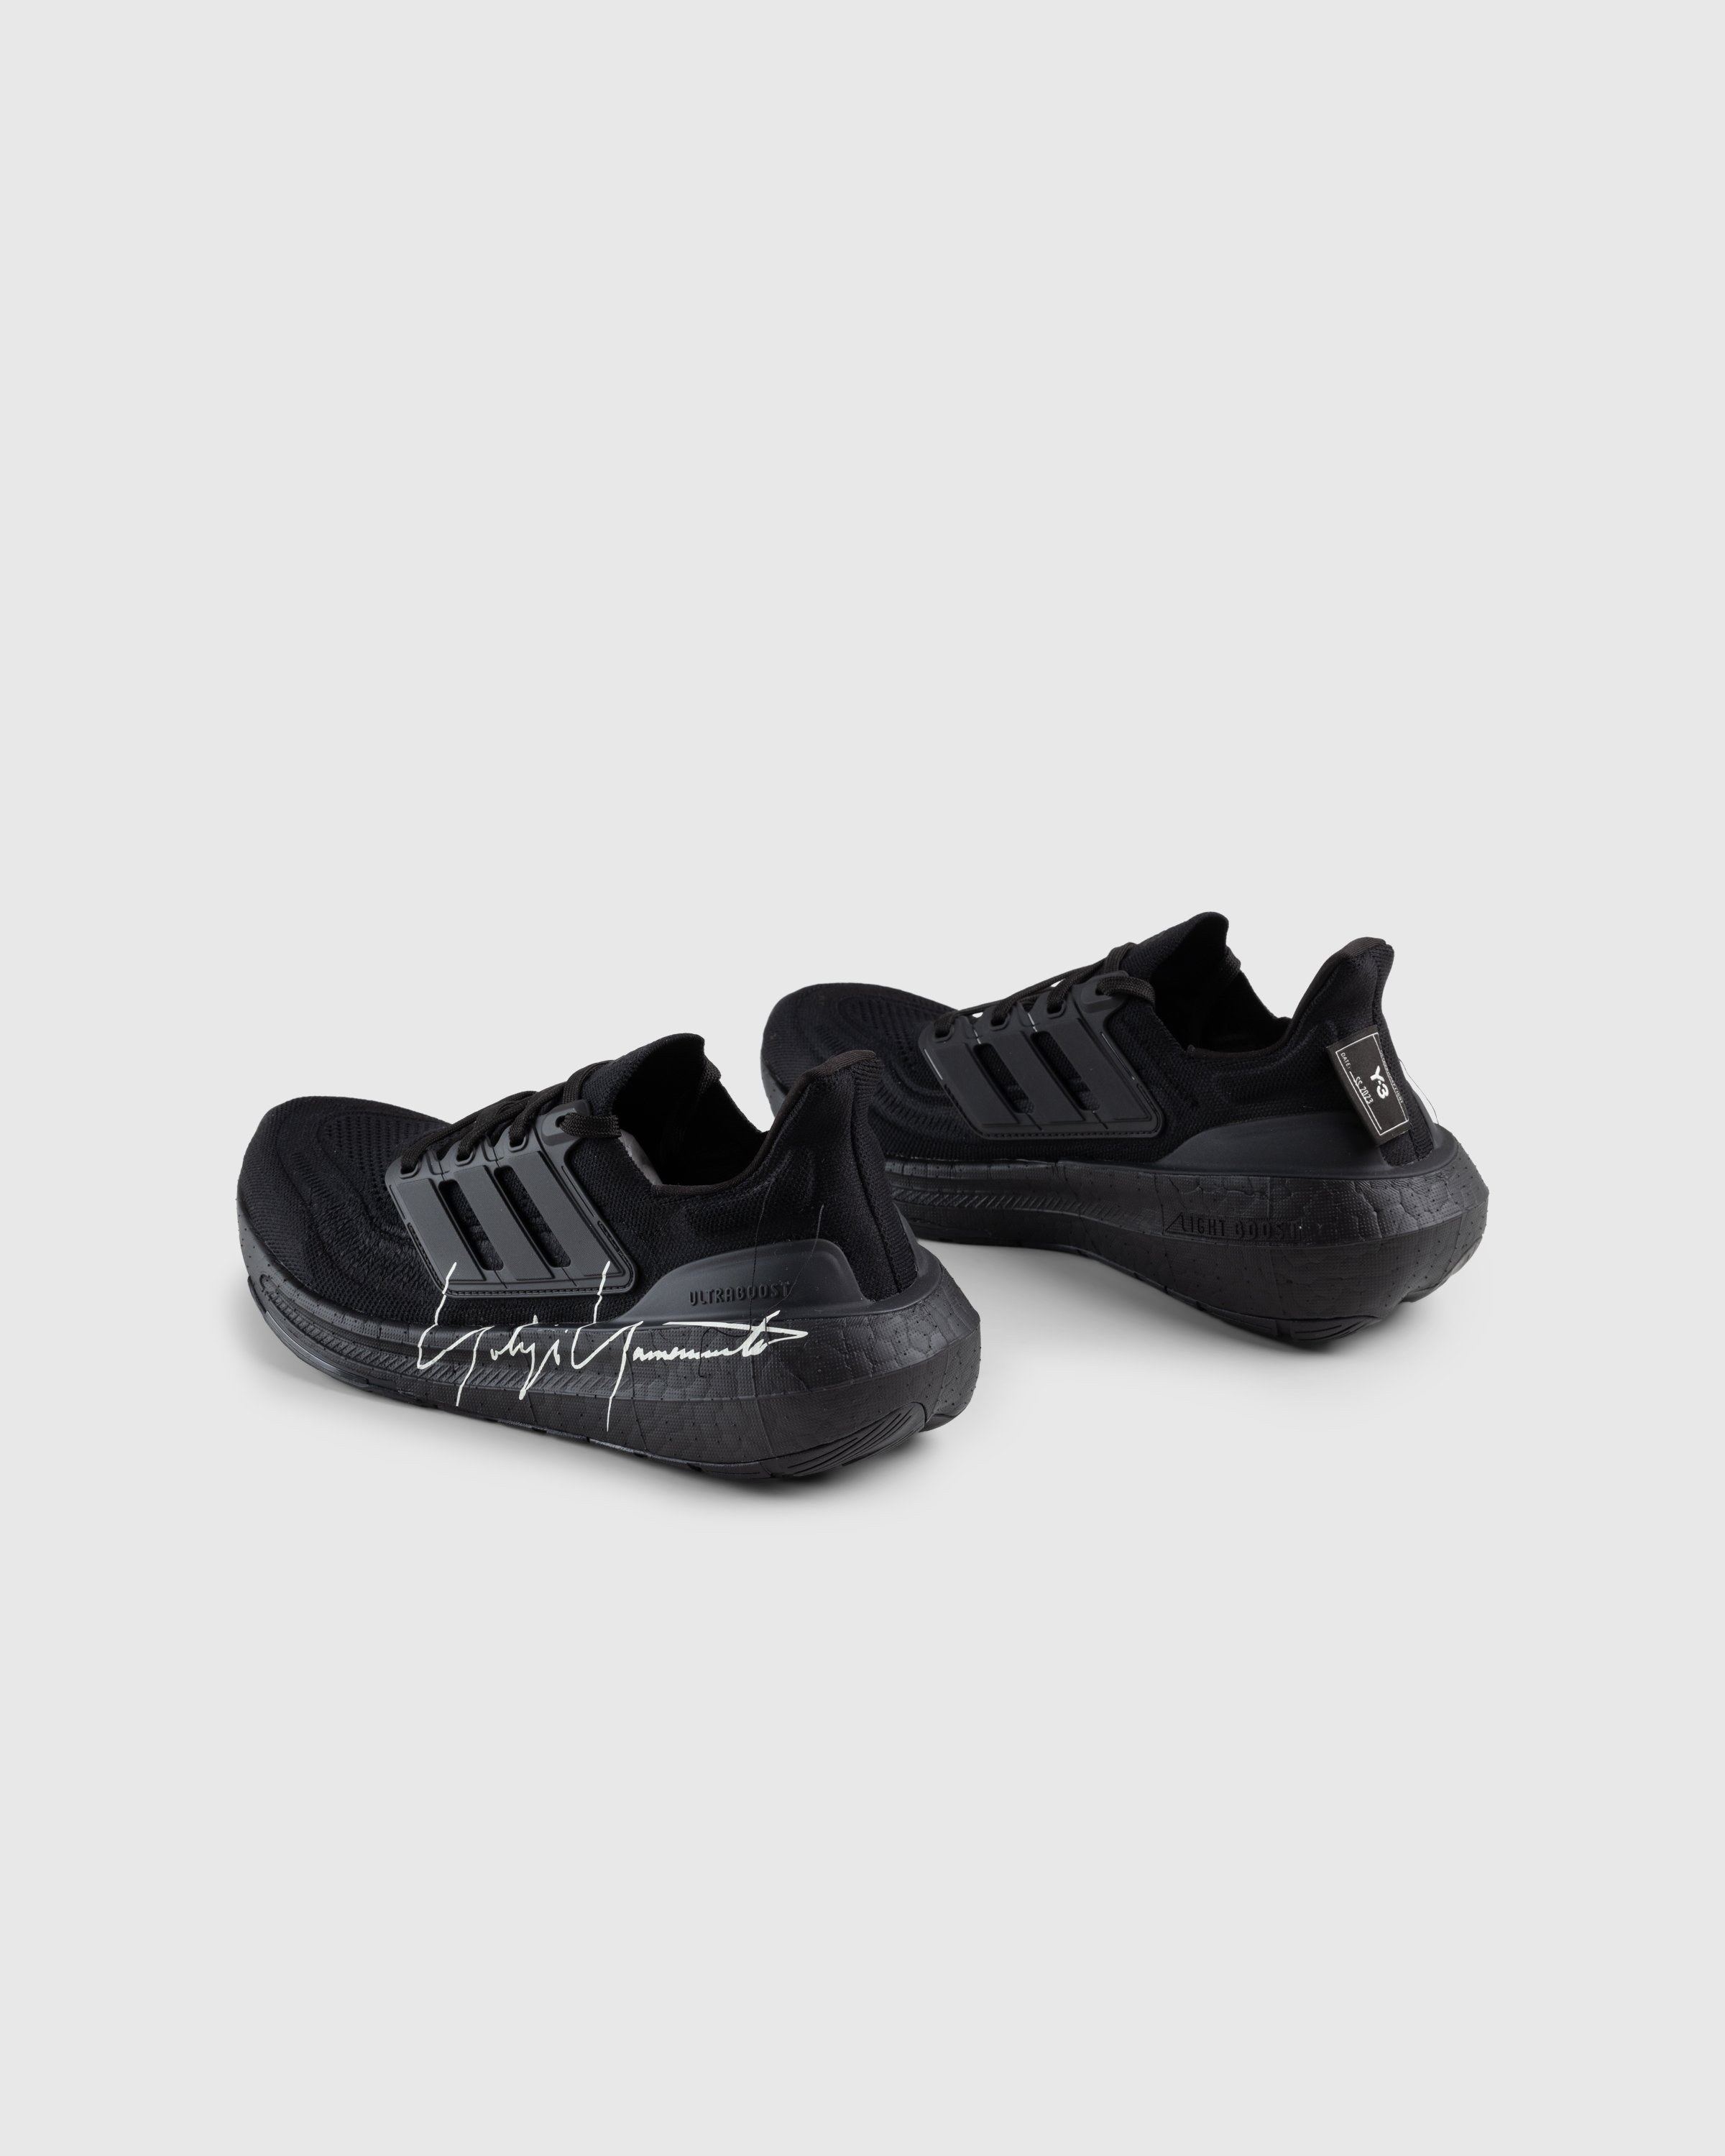 Y-3 - Y-3 Ultraboost Light Black/White - Footwear - Black - Image 4